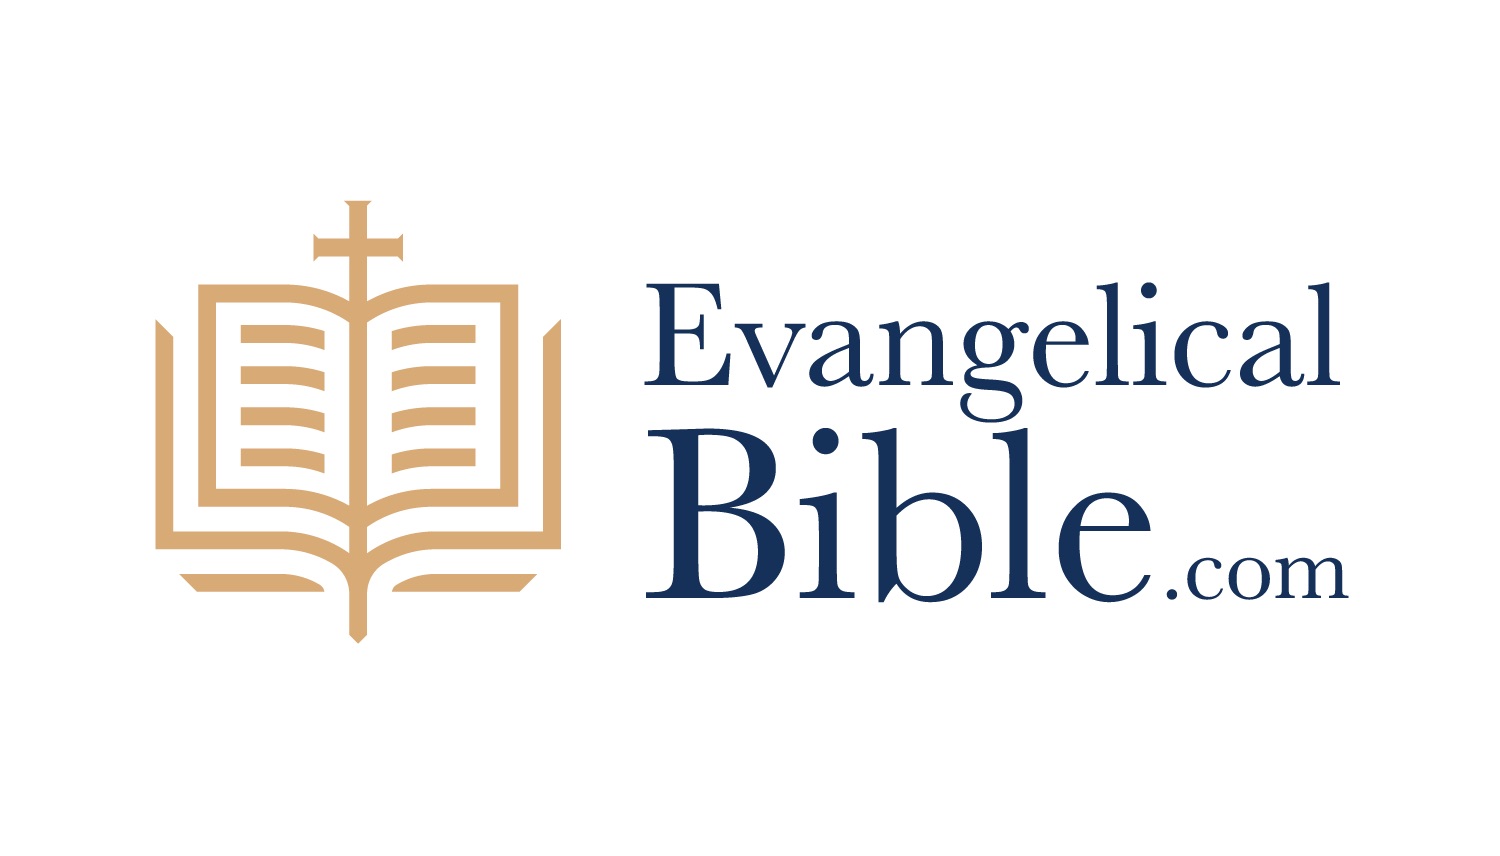 (c) Evangelicalbible.com